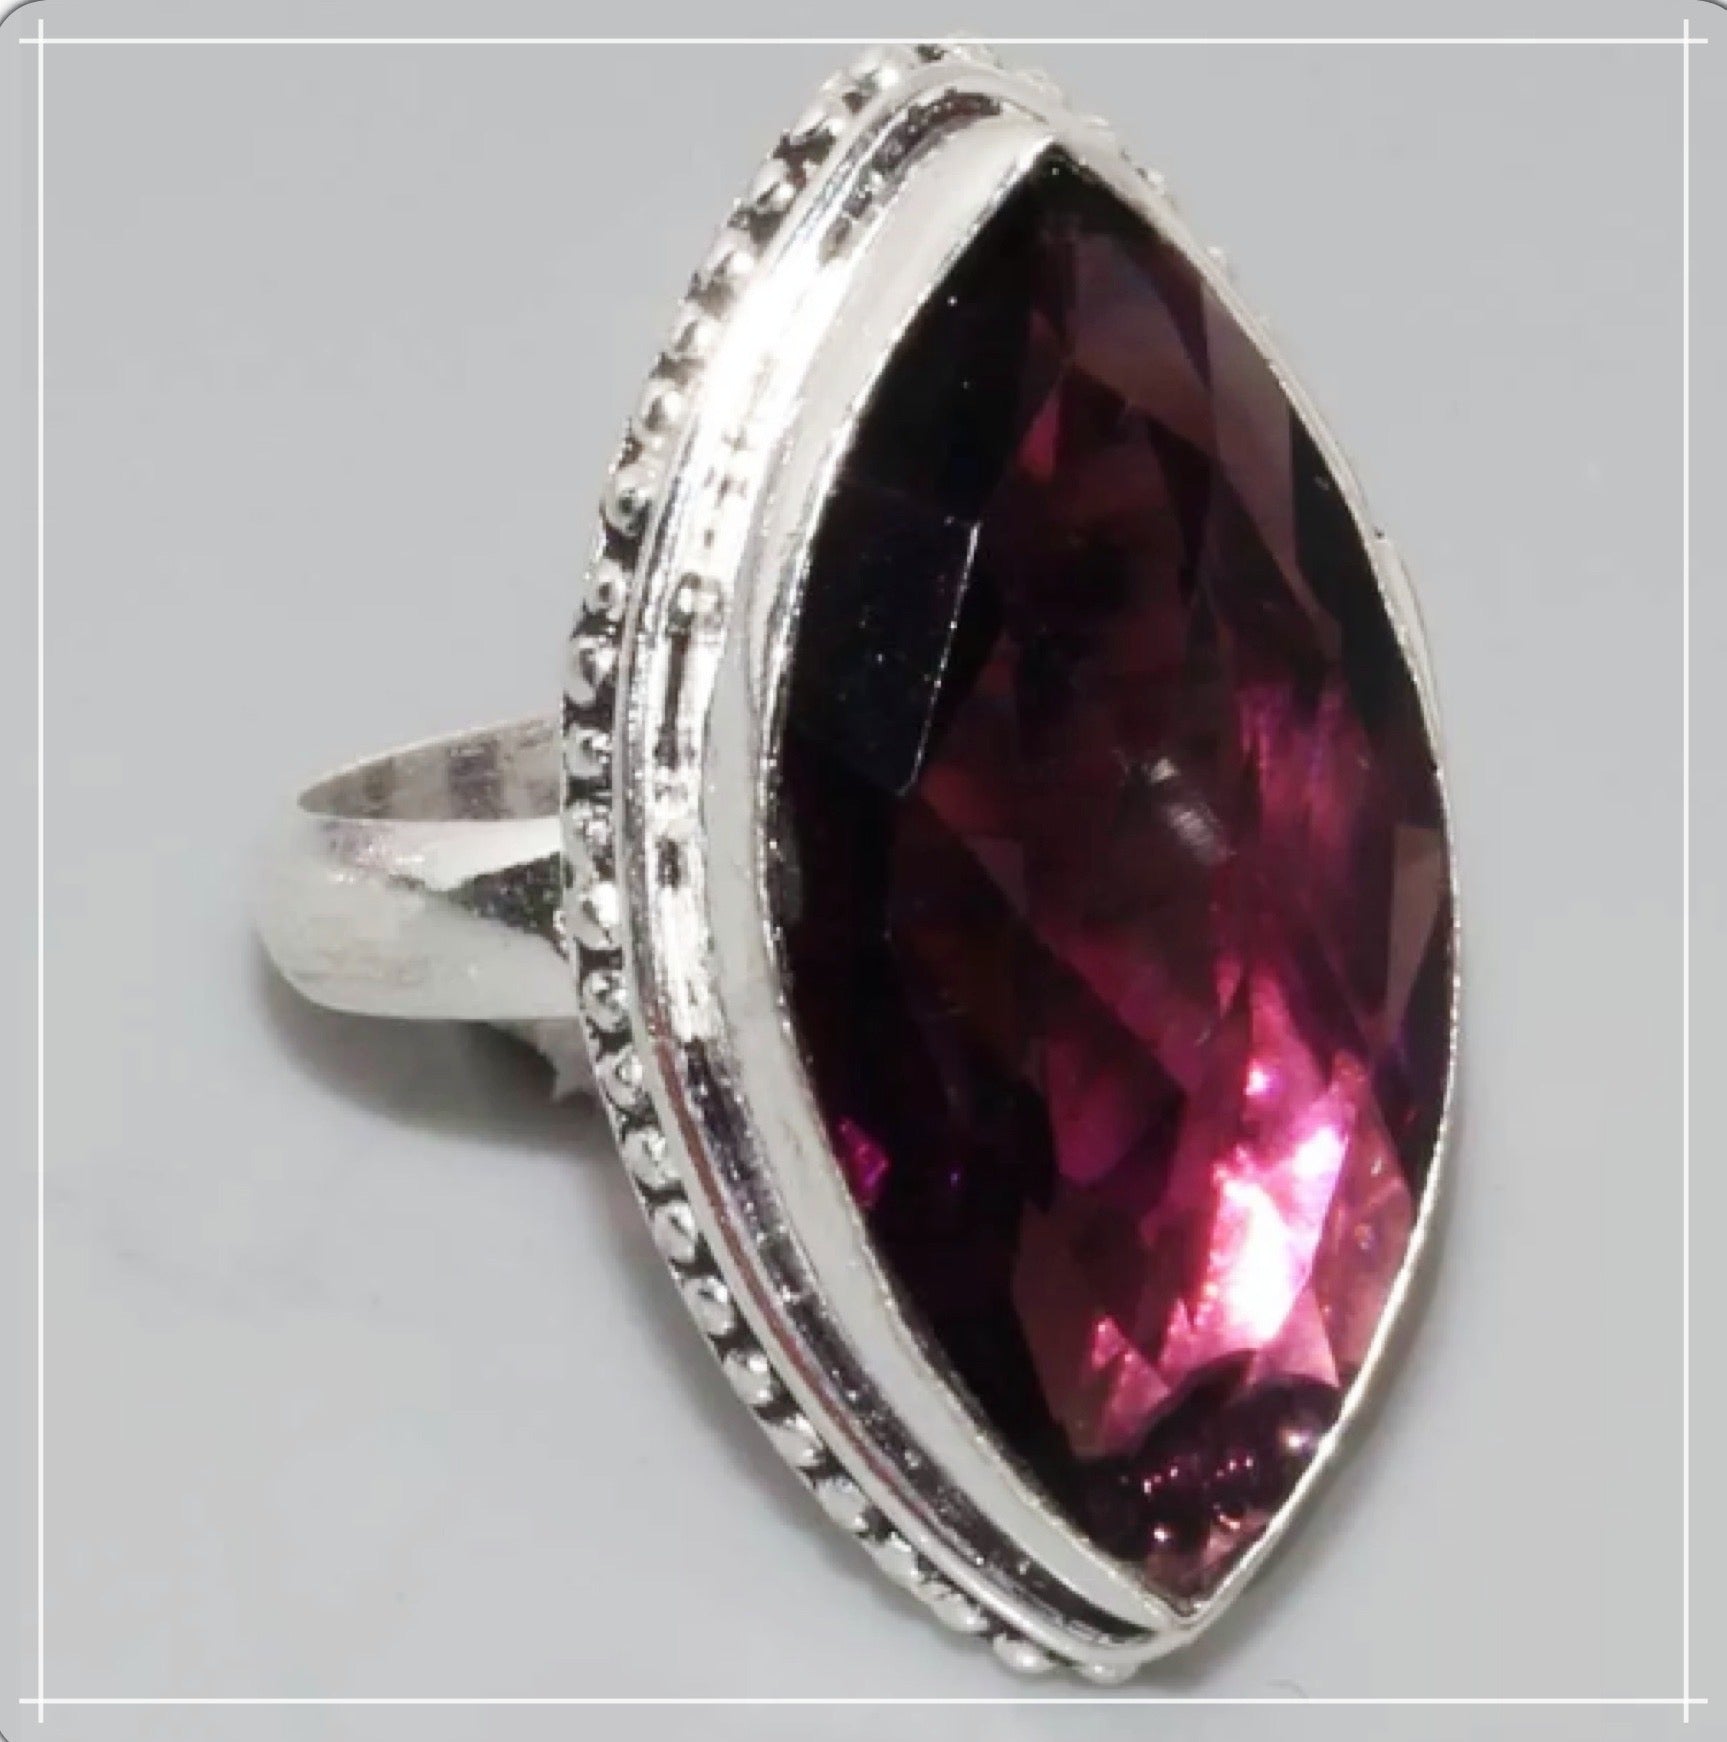 African Purple Amethyst Gemstone 925 Silver Ring Size 9.75 - BELLADONNA